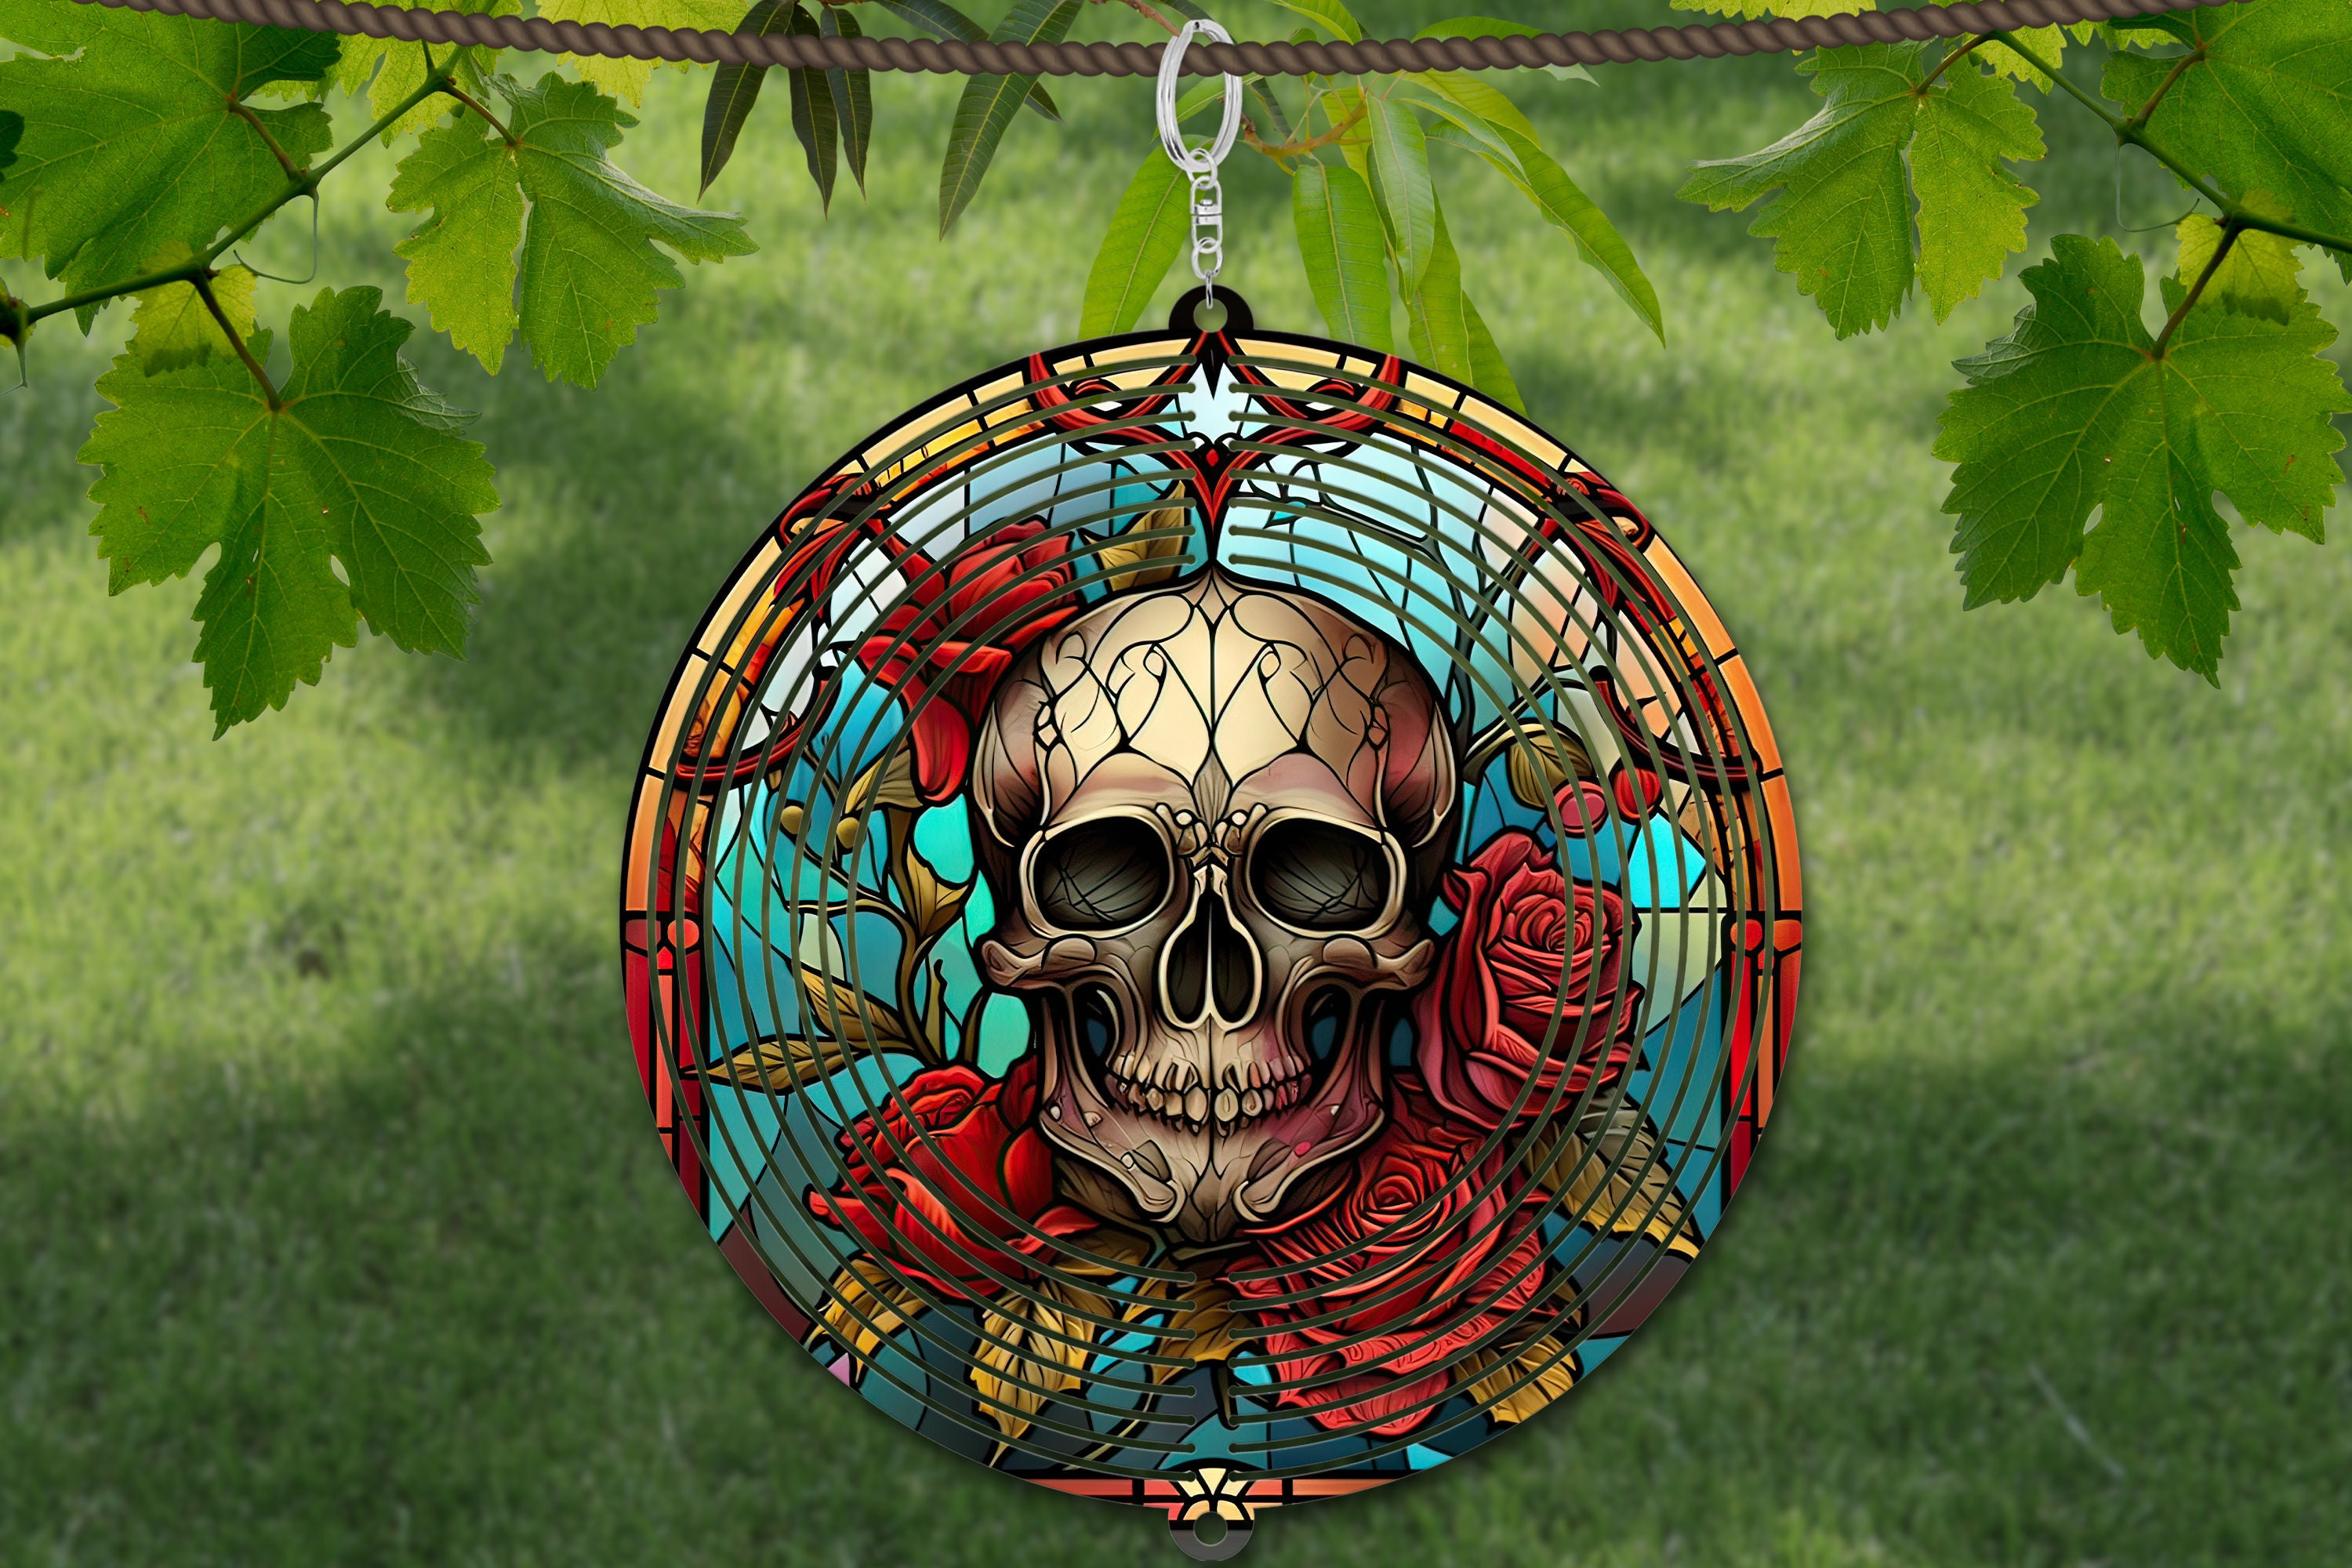 Skull Wind Spinner For Yard And Garden Watercolor, Outdoor Garden Yard Decoration, Garden Decor, Chime Art Gift